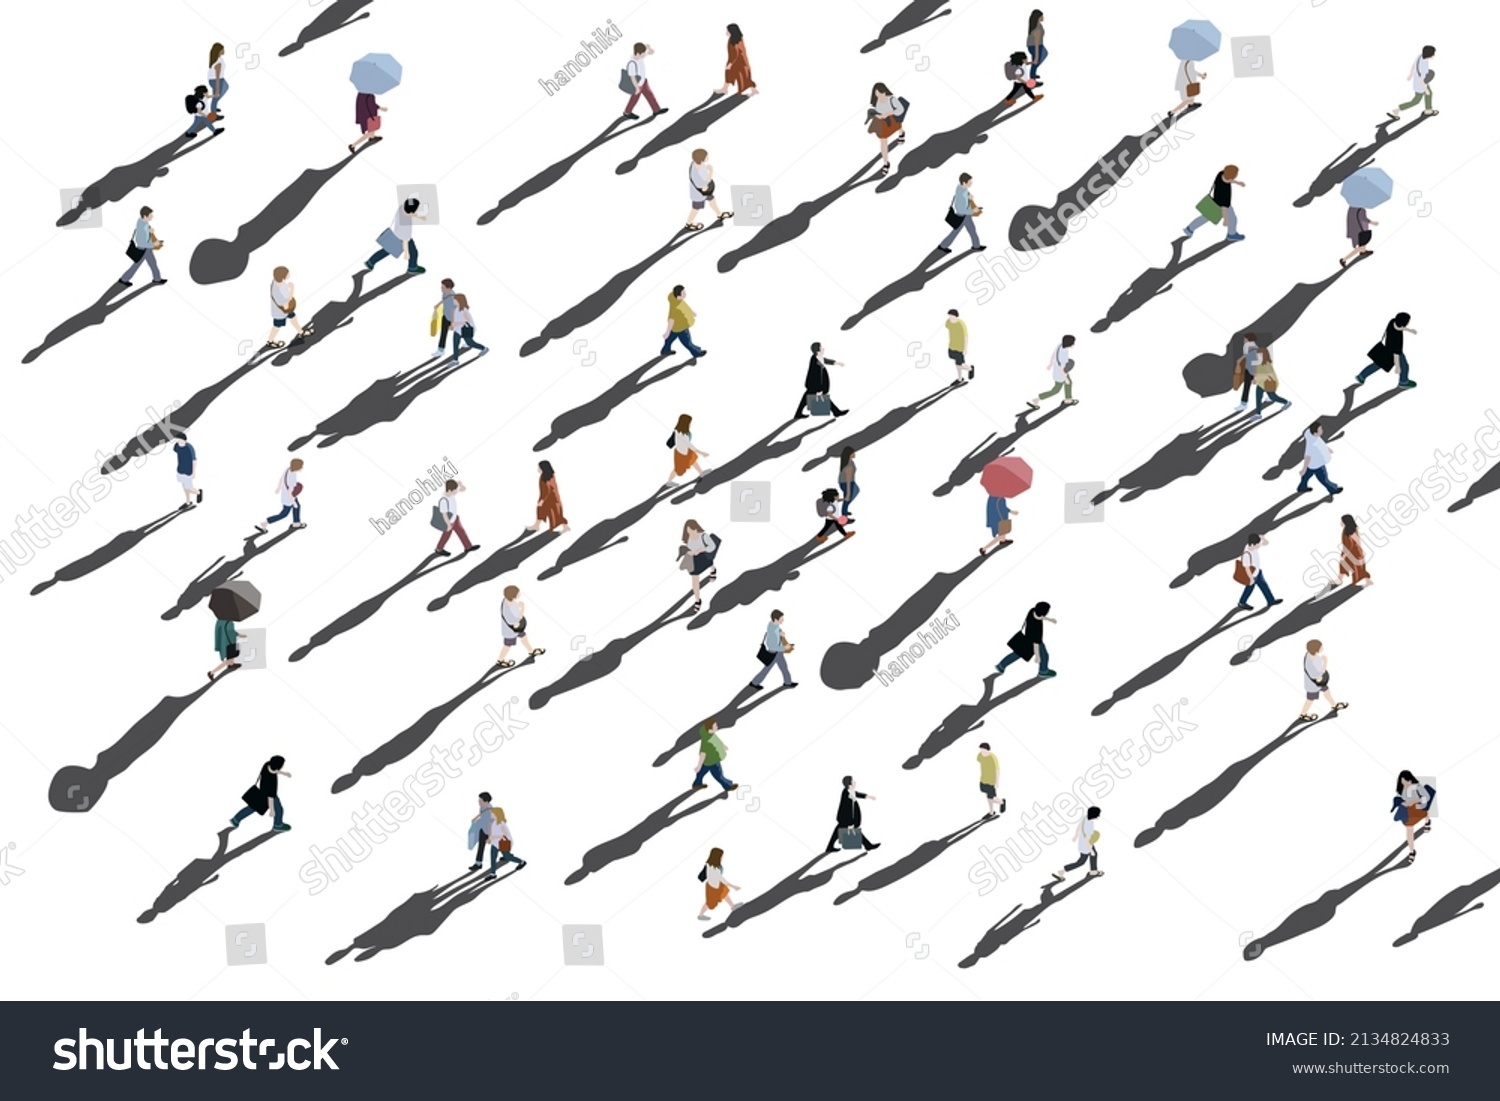 people walking aerial - illustration of crowd of people #2134824833